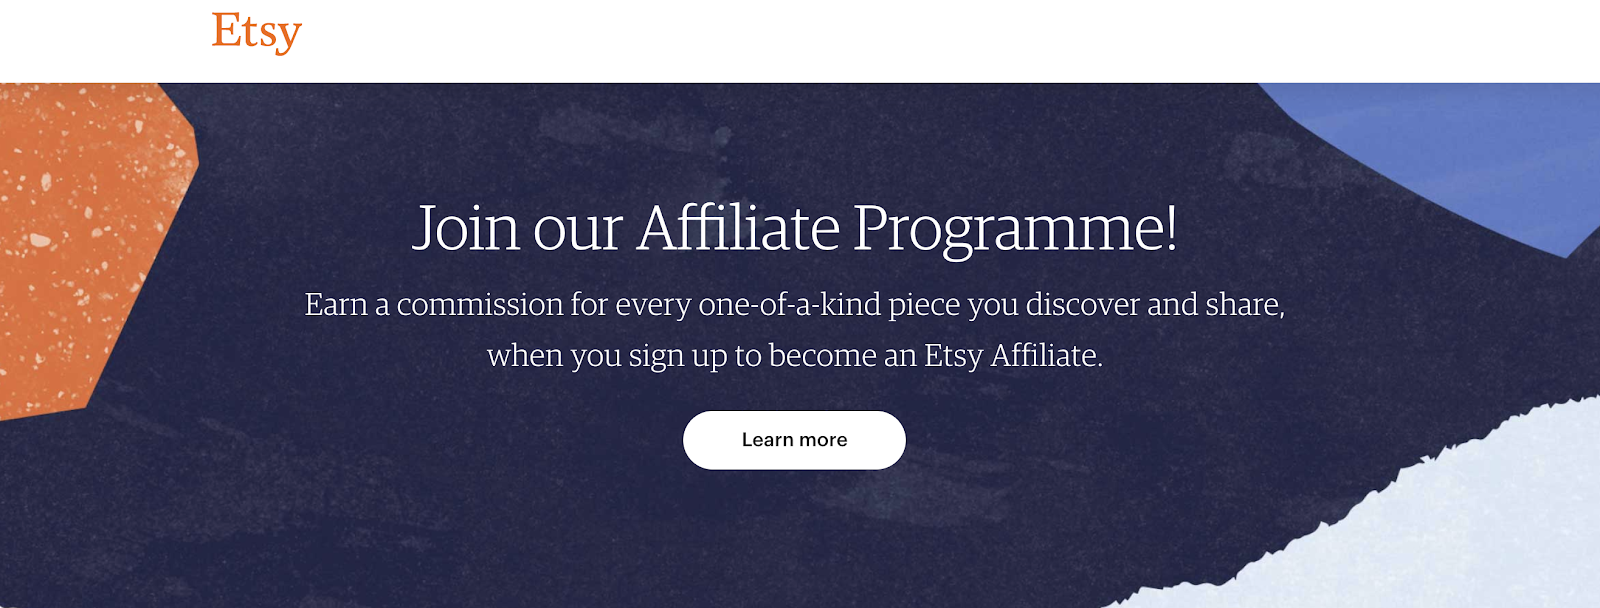 Etsy's Affiliate Program Landing Page (Screenshot)